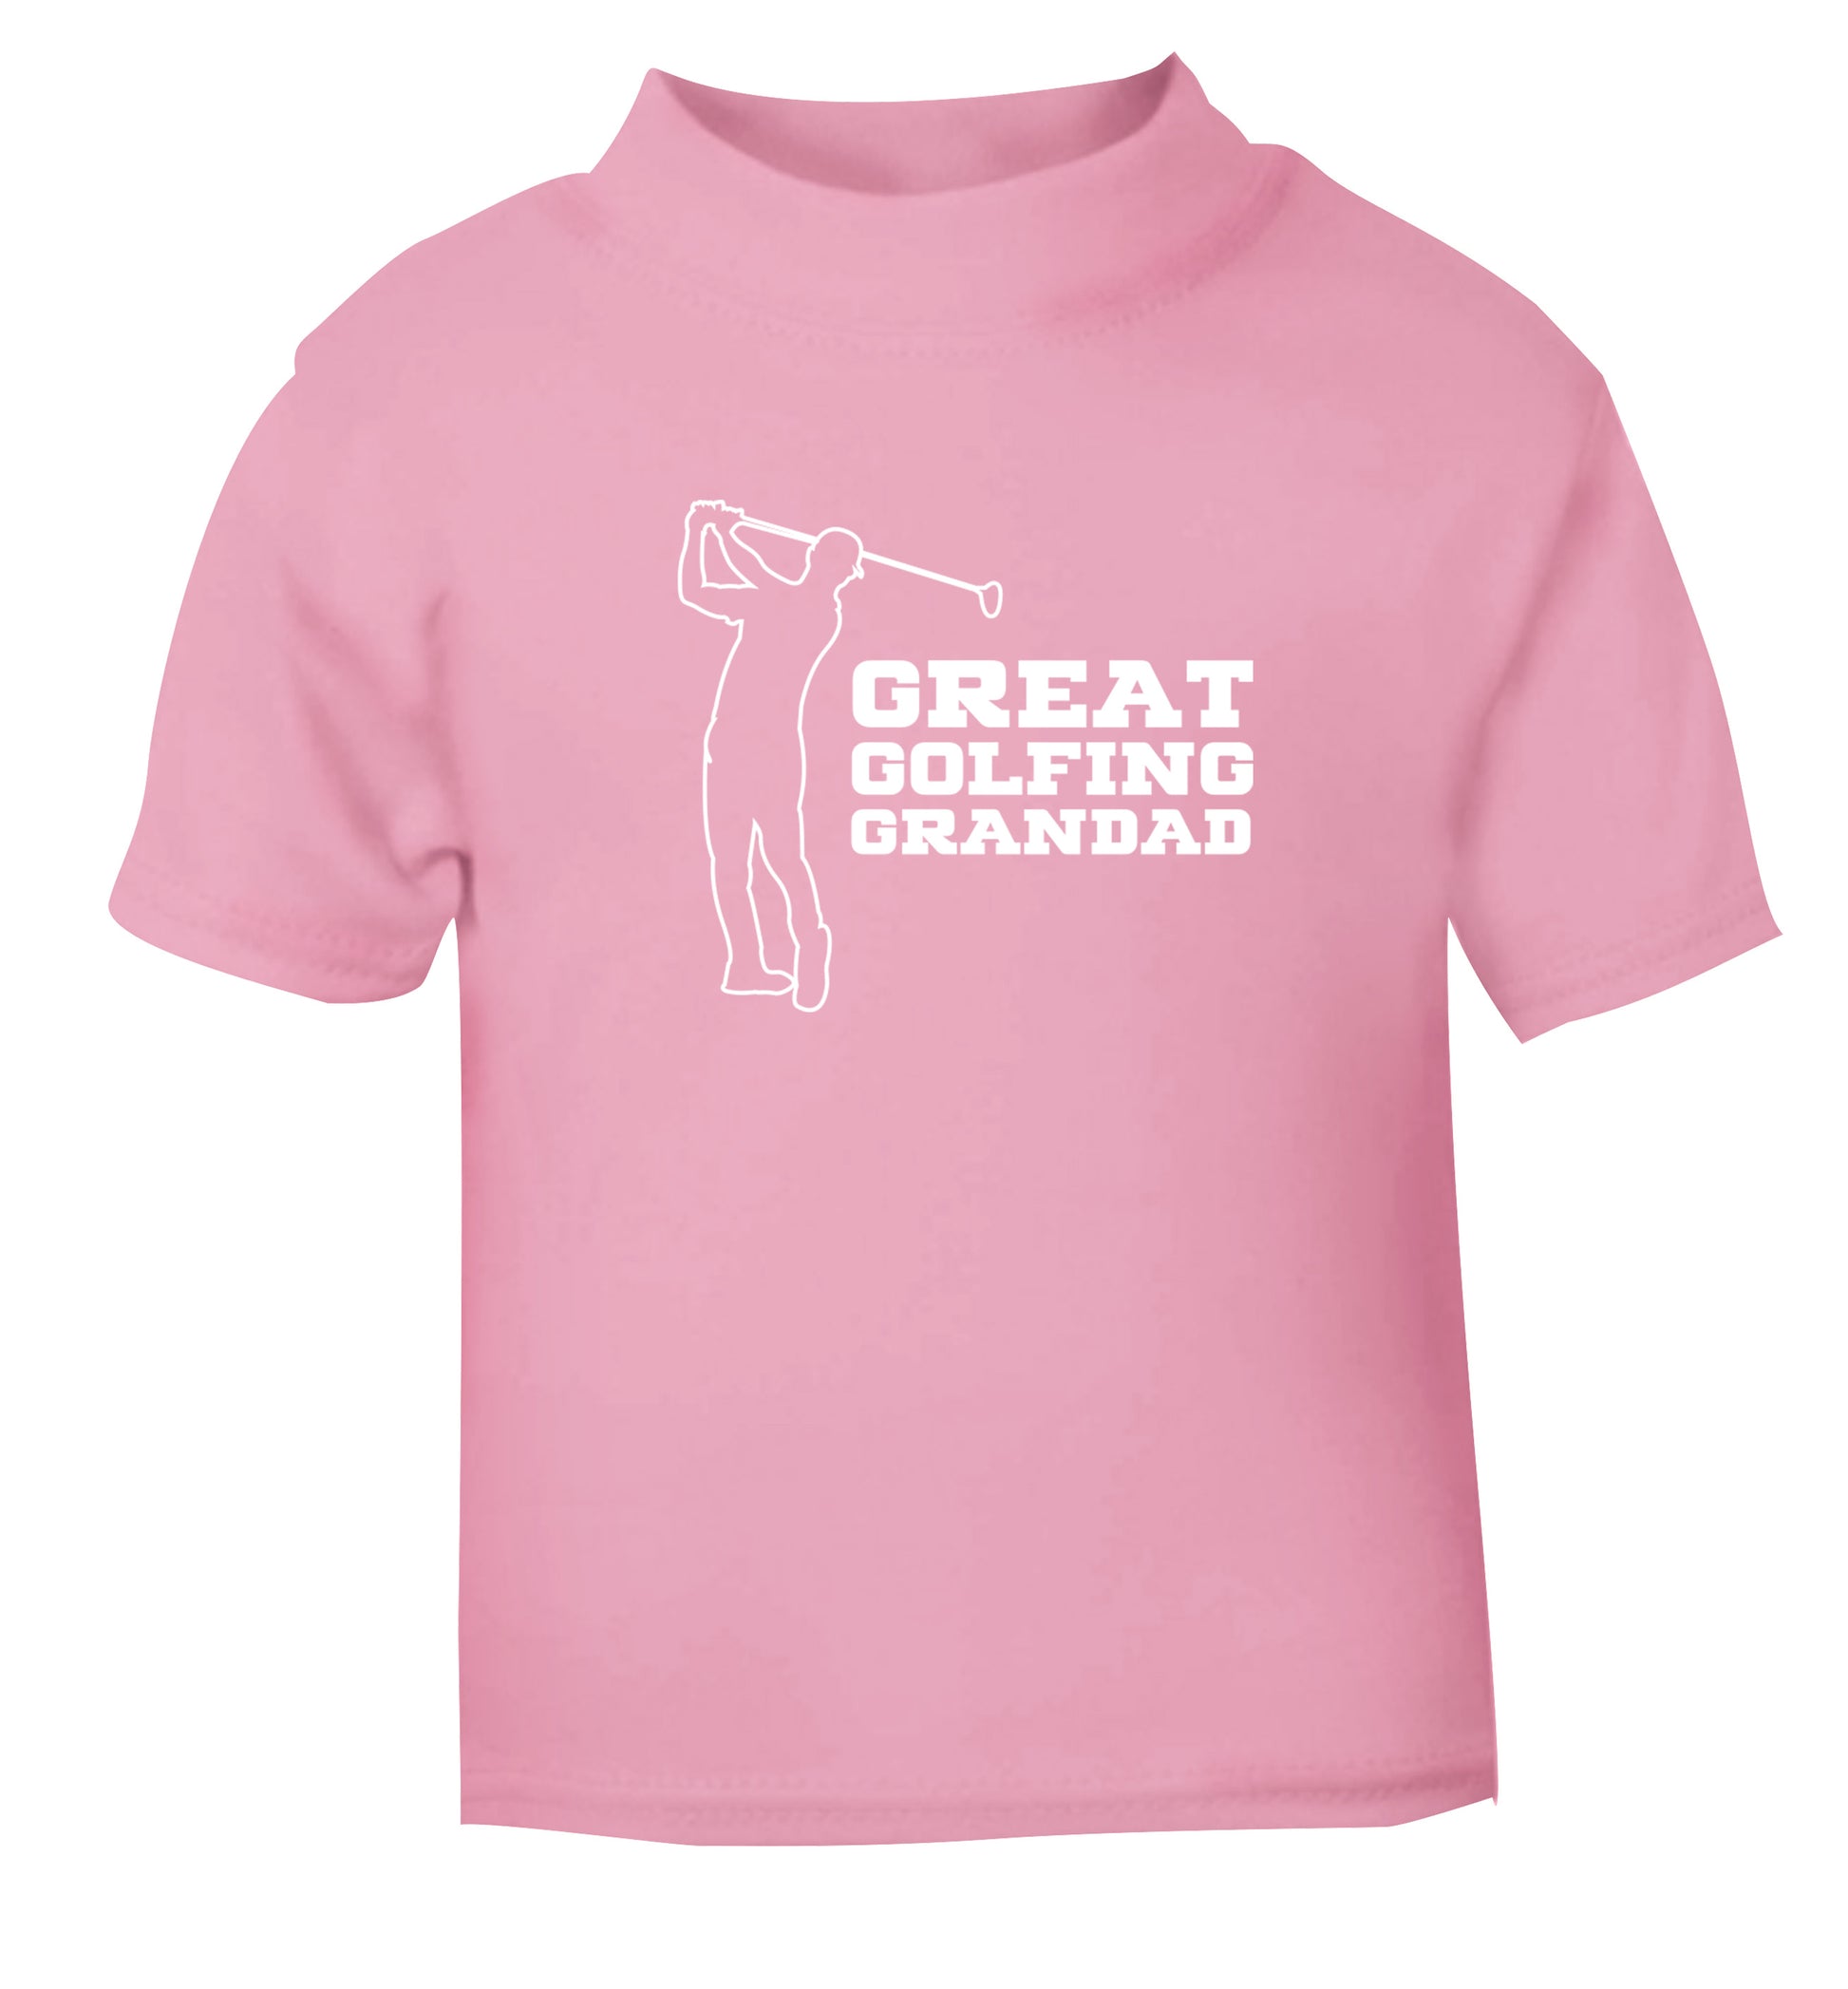 Great Golfing Grandad light pink Baby Toddler Tshirt 2 Years